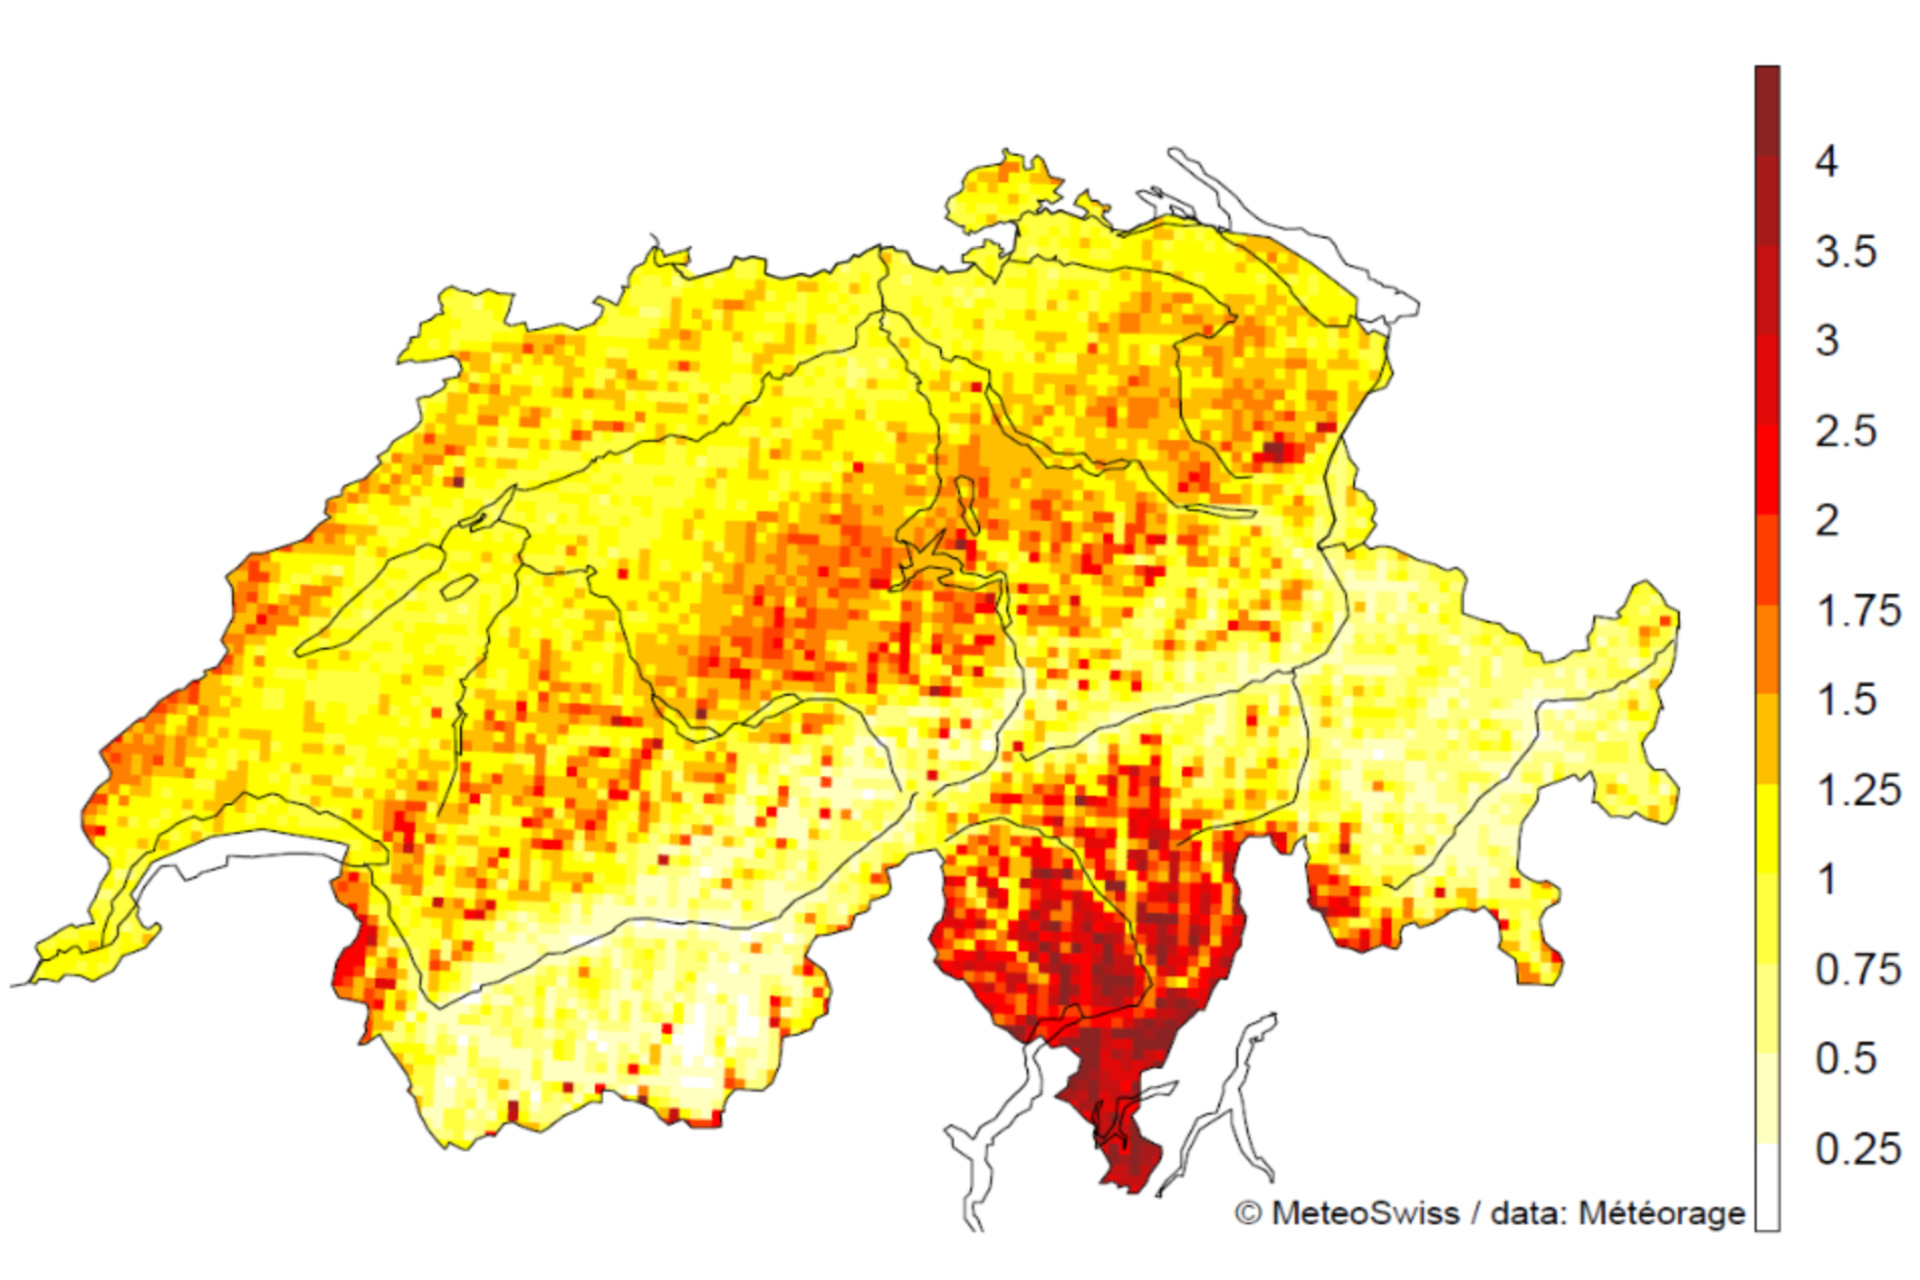 Blikseminslagen: het aantal blikseminslagen per vierkante kilometer in Zwitserland in de periode 2000-2020, exclusief secundaire blikseminslagen